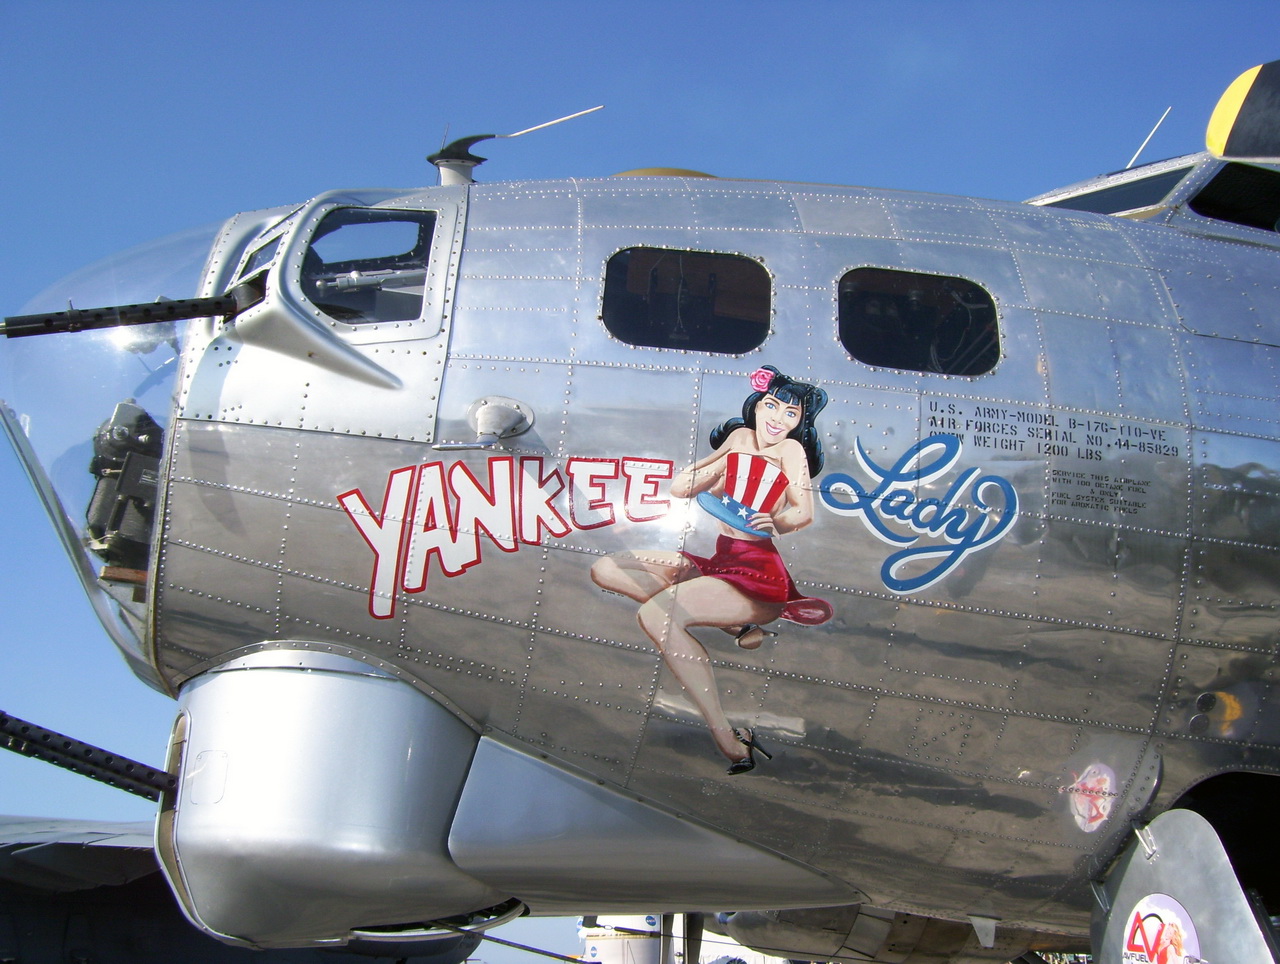 B-17 Bomber YANKEE LADY aircraft noseart